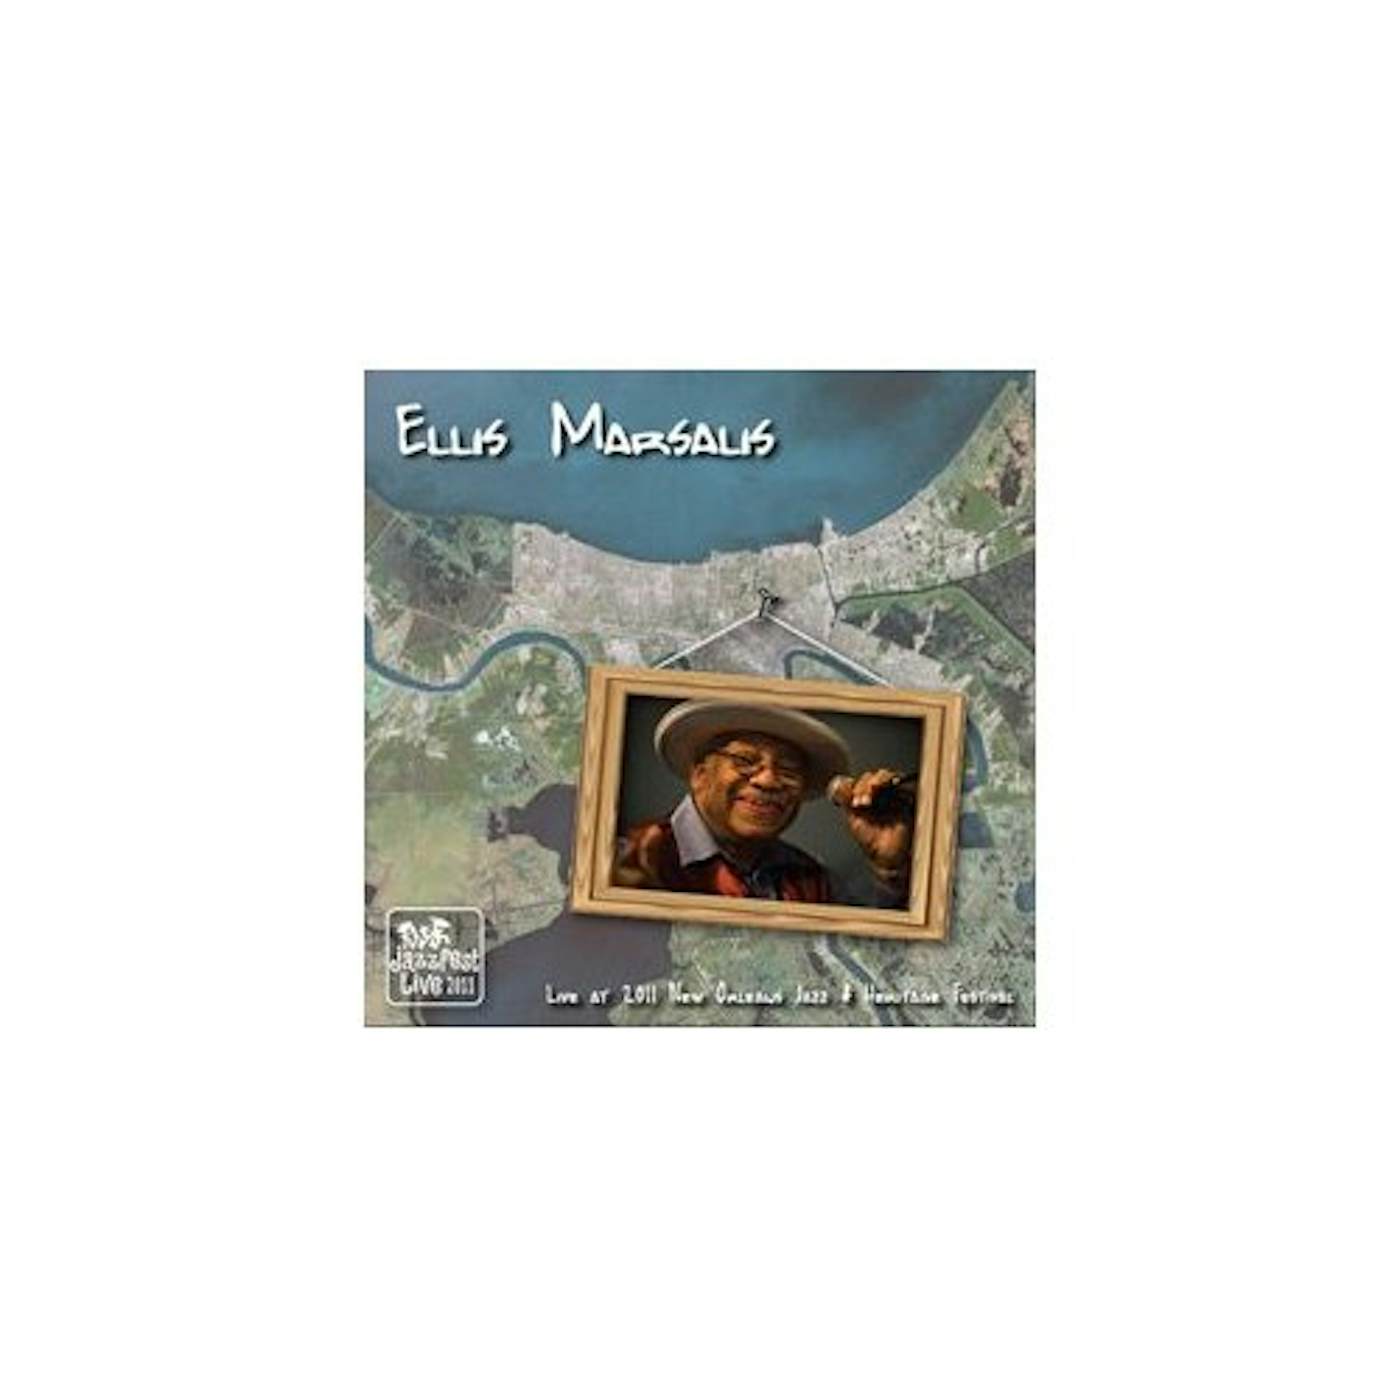 Ellis Marsalis LIVE AT JAZZ FEST 2011 CD